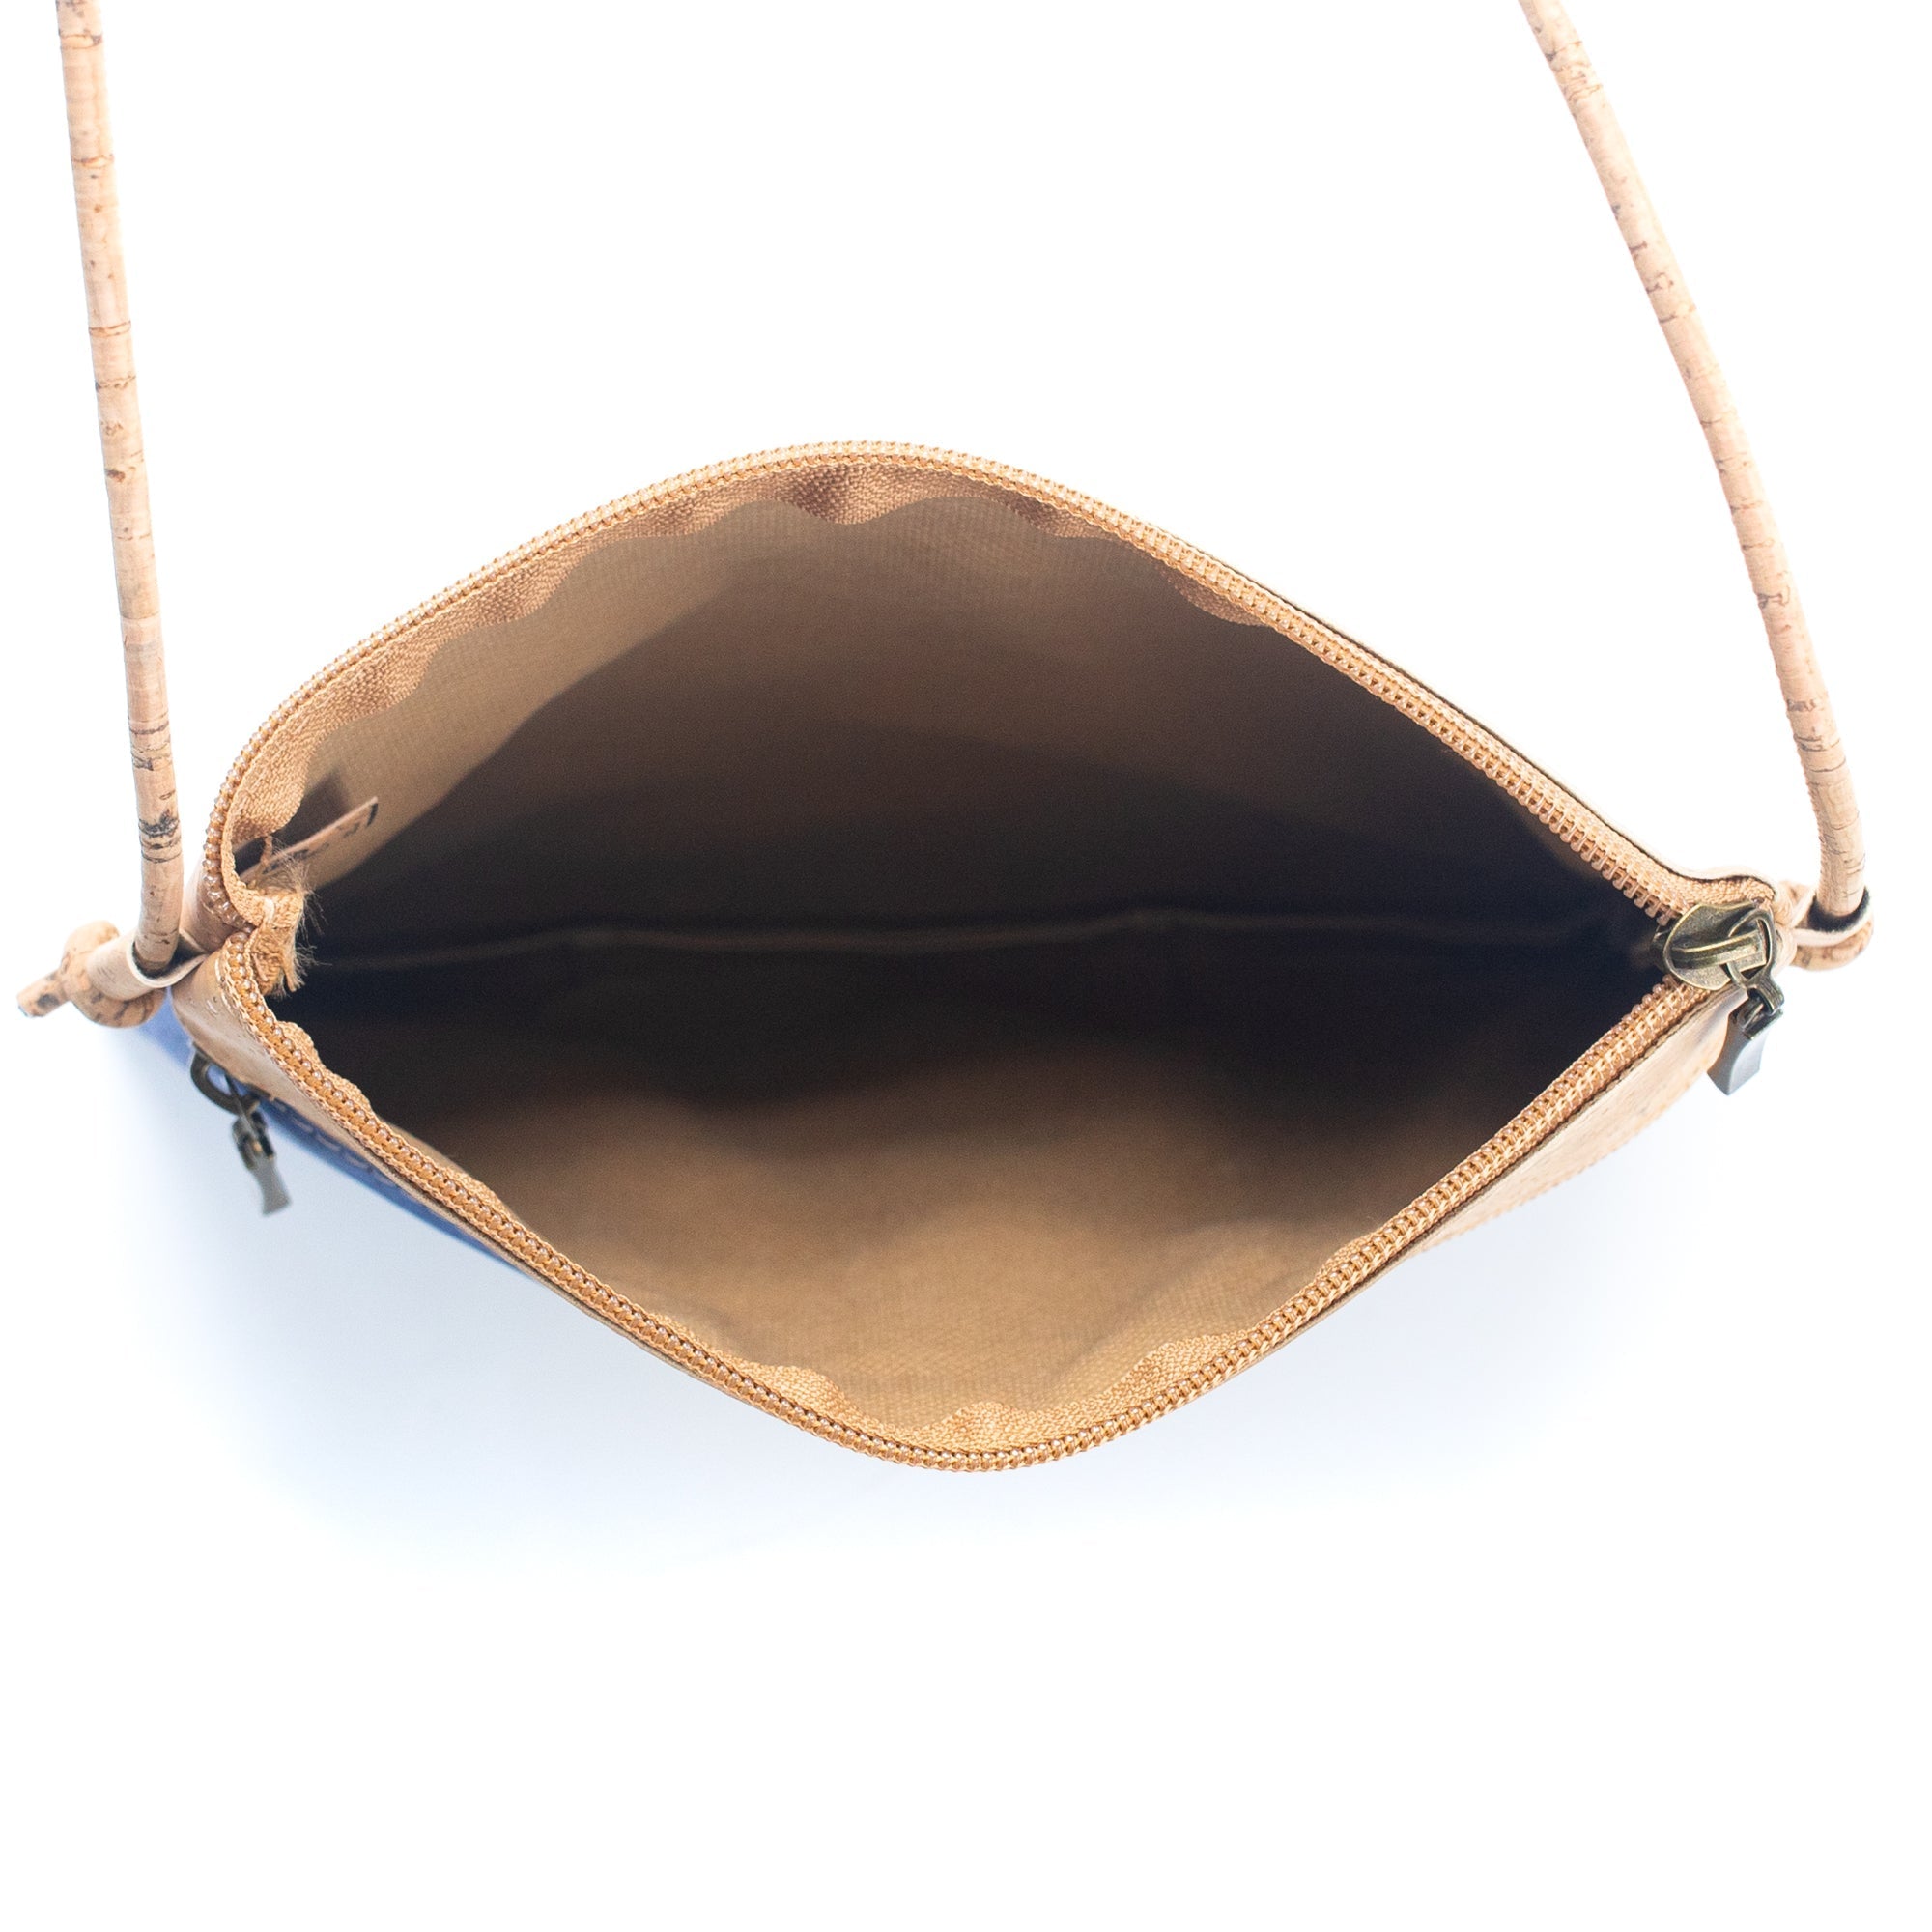 Buy BELLISSA Women's Checked Pattern Artificial Leather Satchel Bag | Ladies  Purse Handbag | Girl's Tote Shoulder Bag (Brown) at Amazon.in